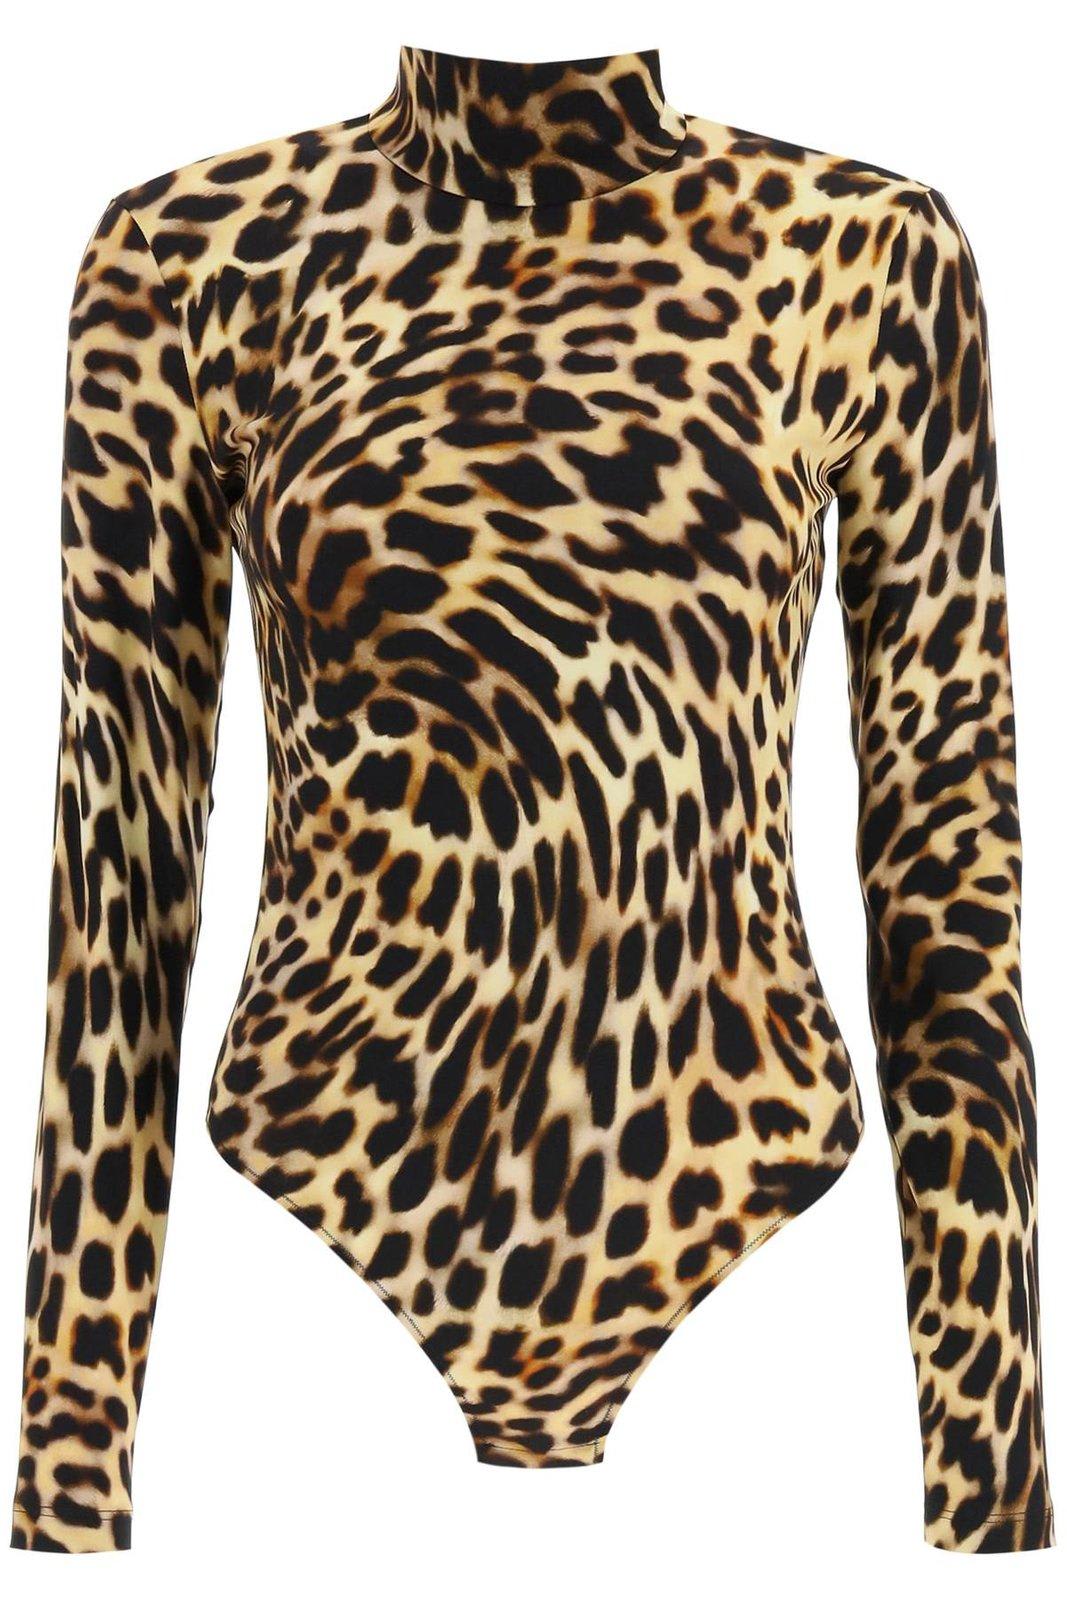 Stella McCartney Cheetah Printed Bodysuit